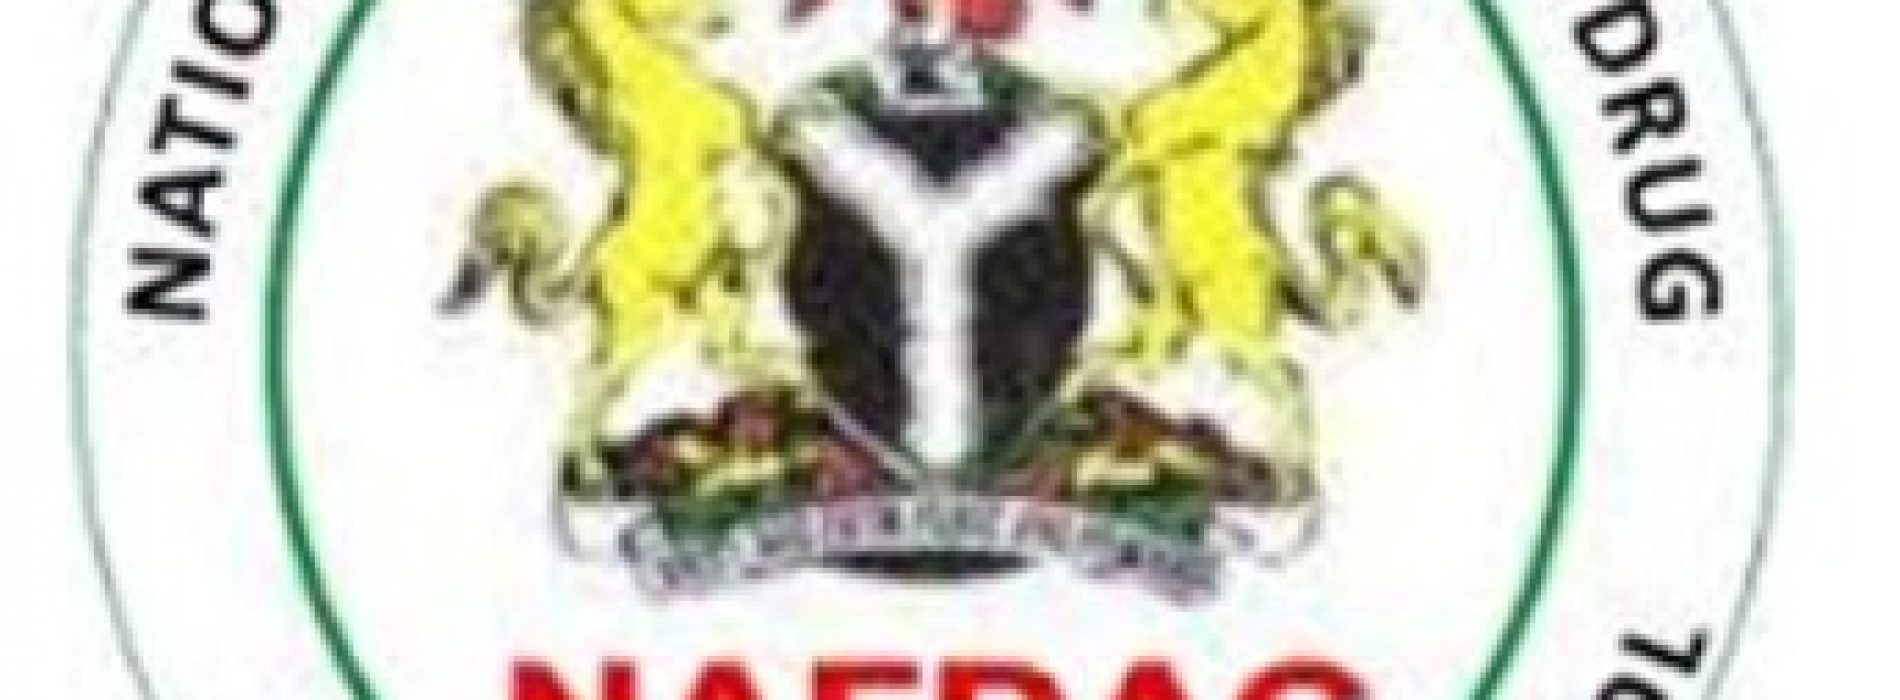 NAFDAC bans registration of sachet alcoholic drinks